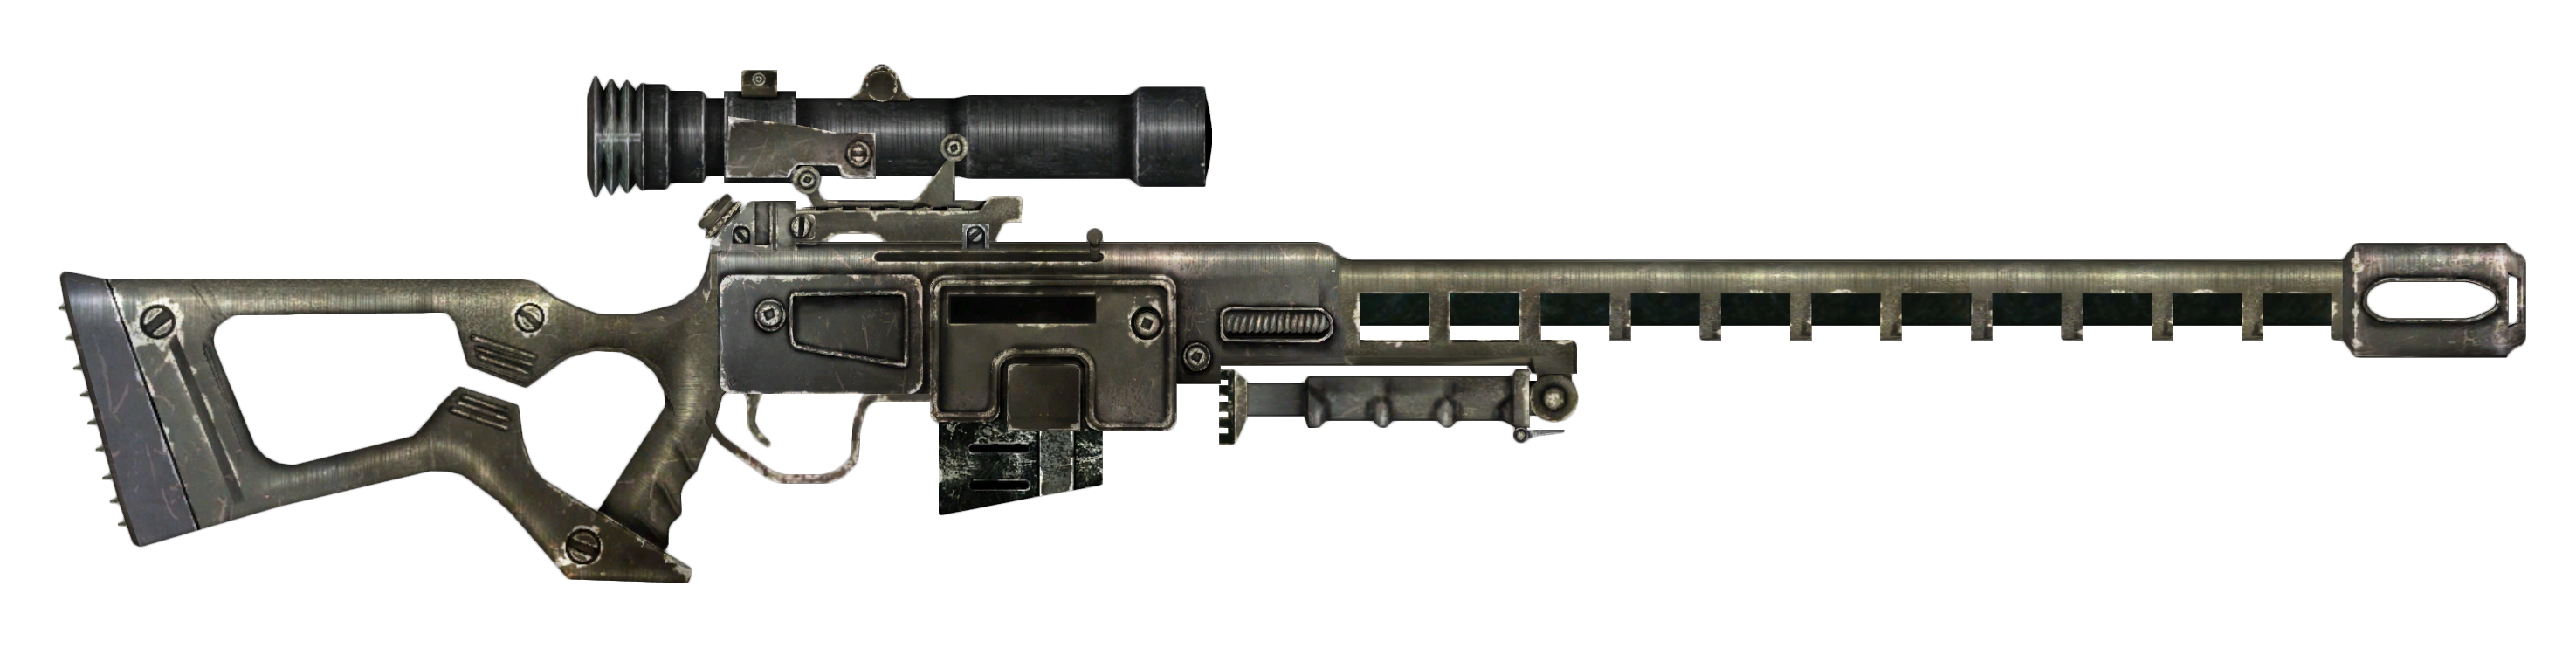 fallout new vegas hunting rifle mods